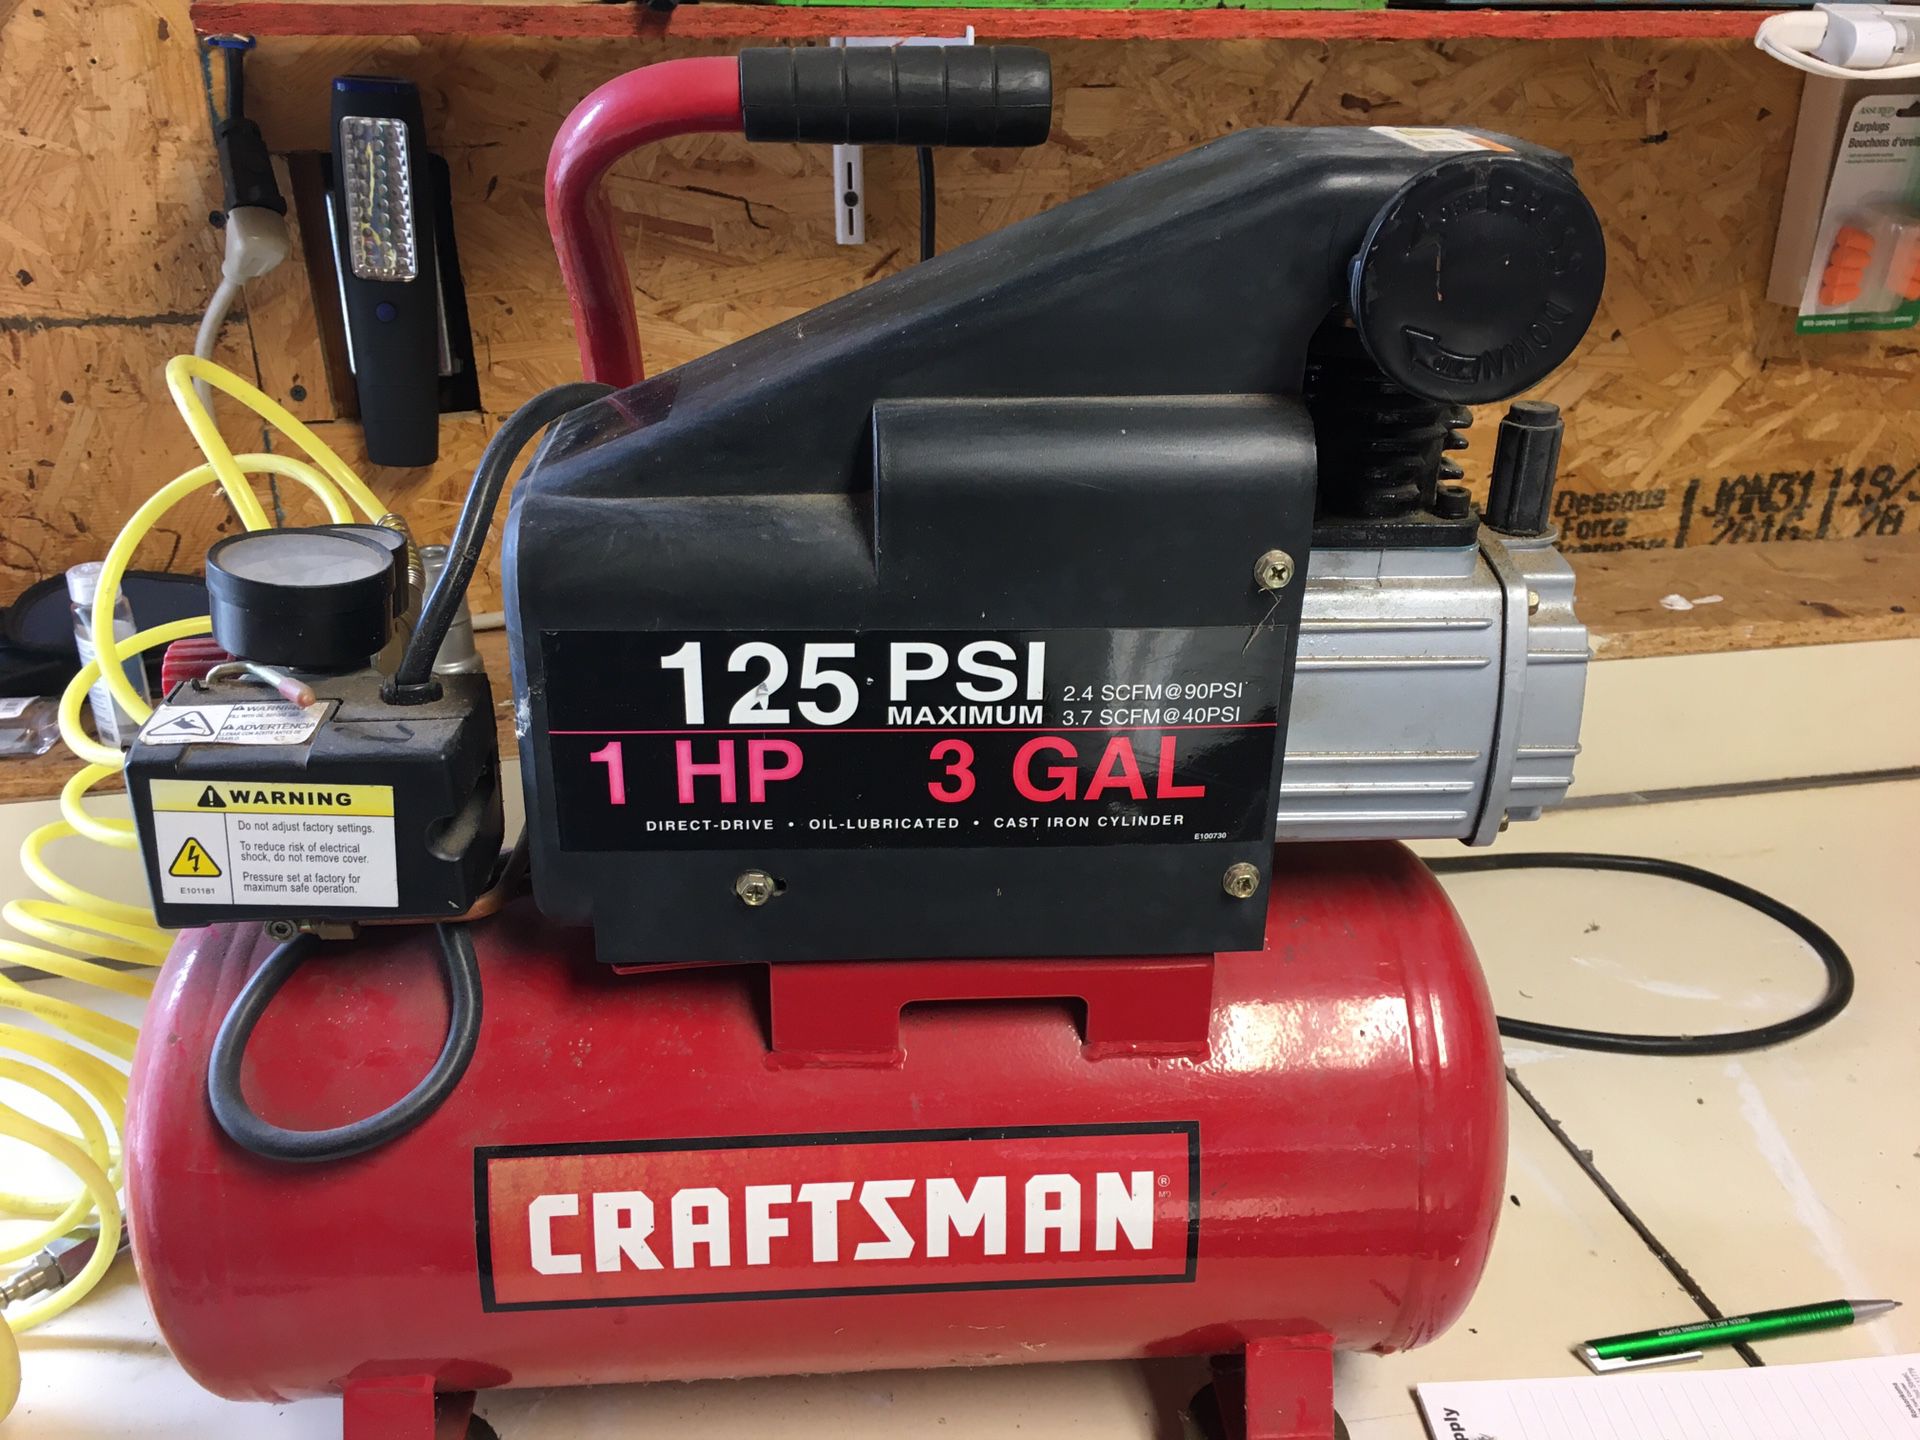 Craftsman compressor 125 psi 1 hp 3 gal